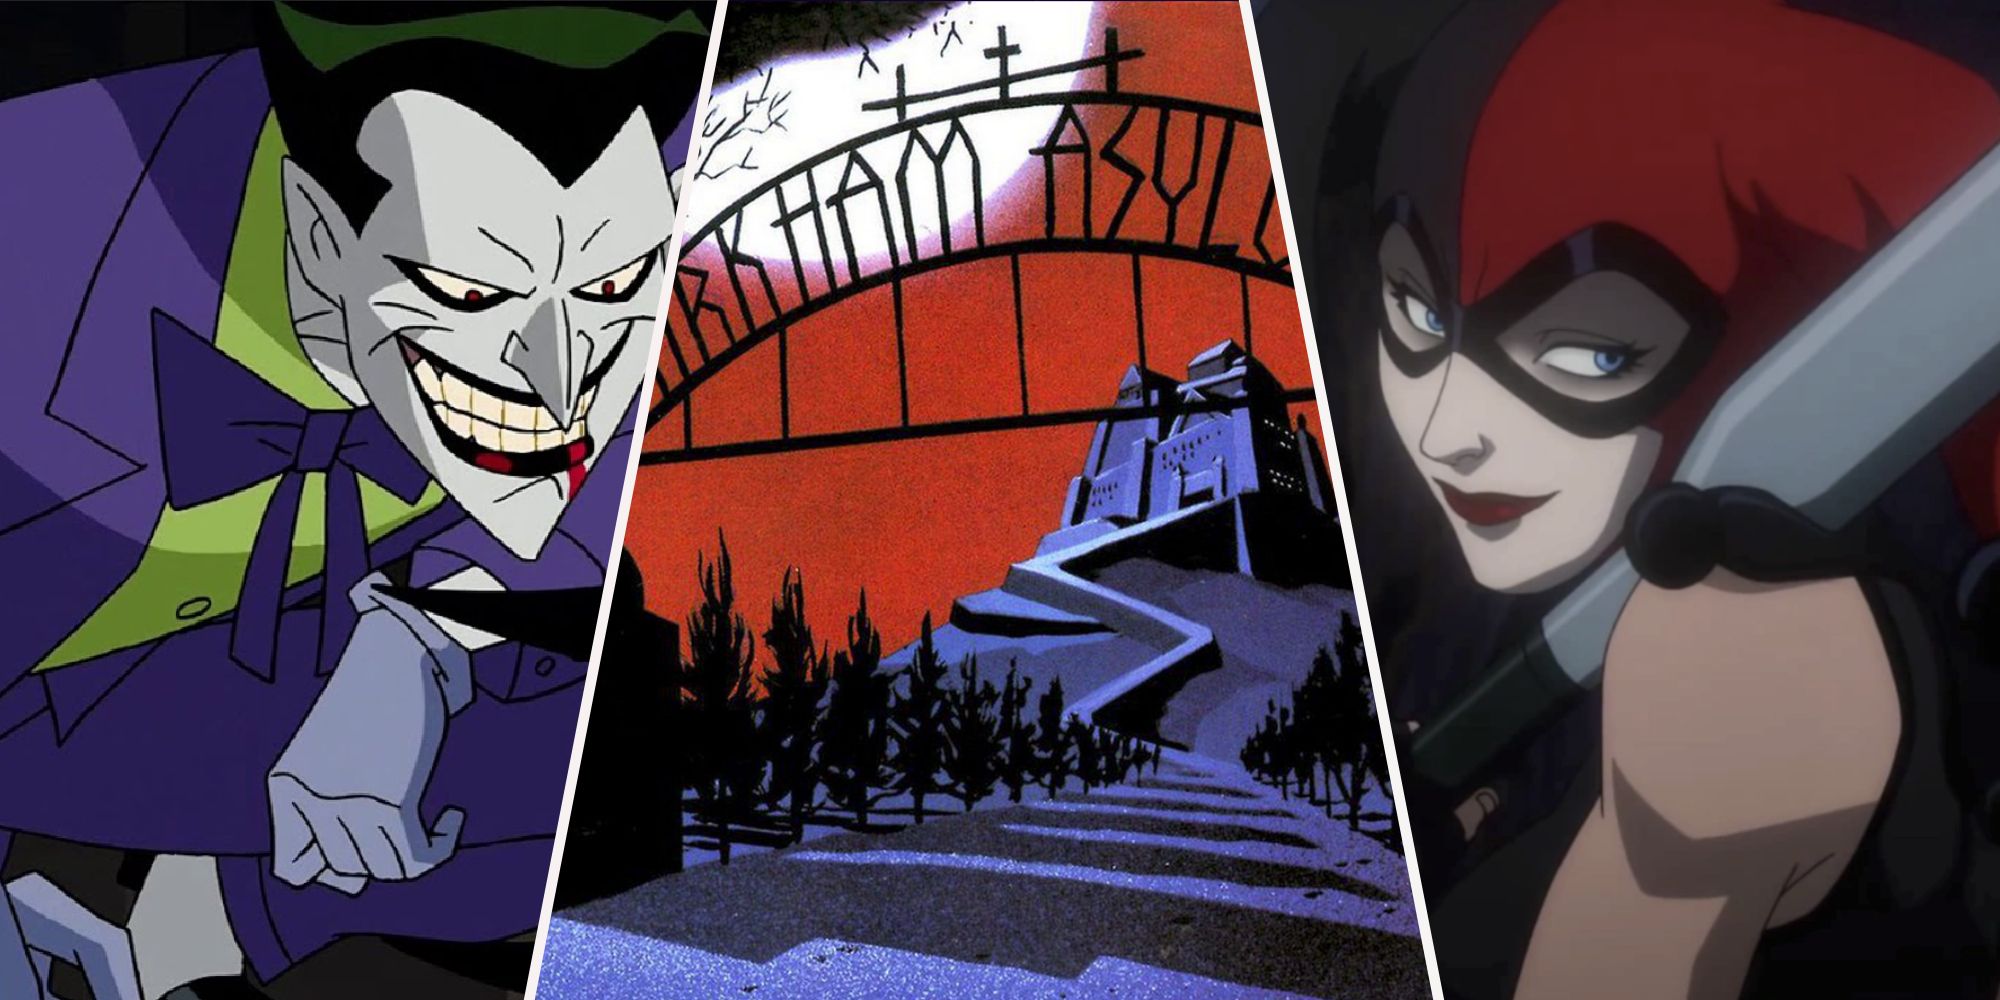 The Joker and Harley Quinn flank an image of Arkham Asylum